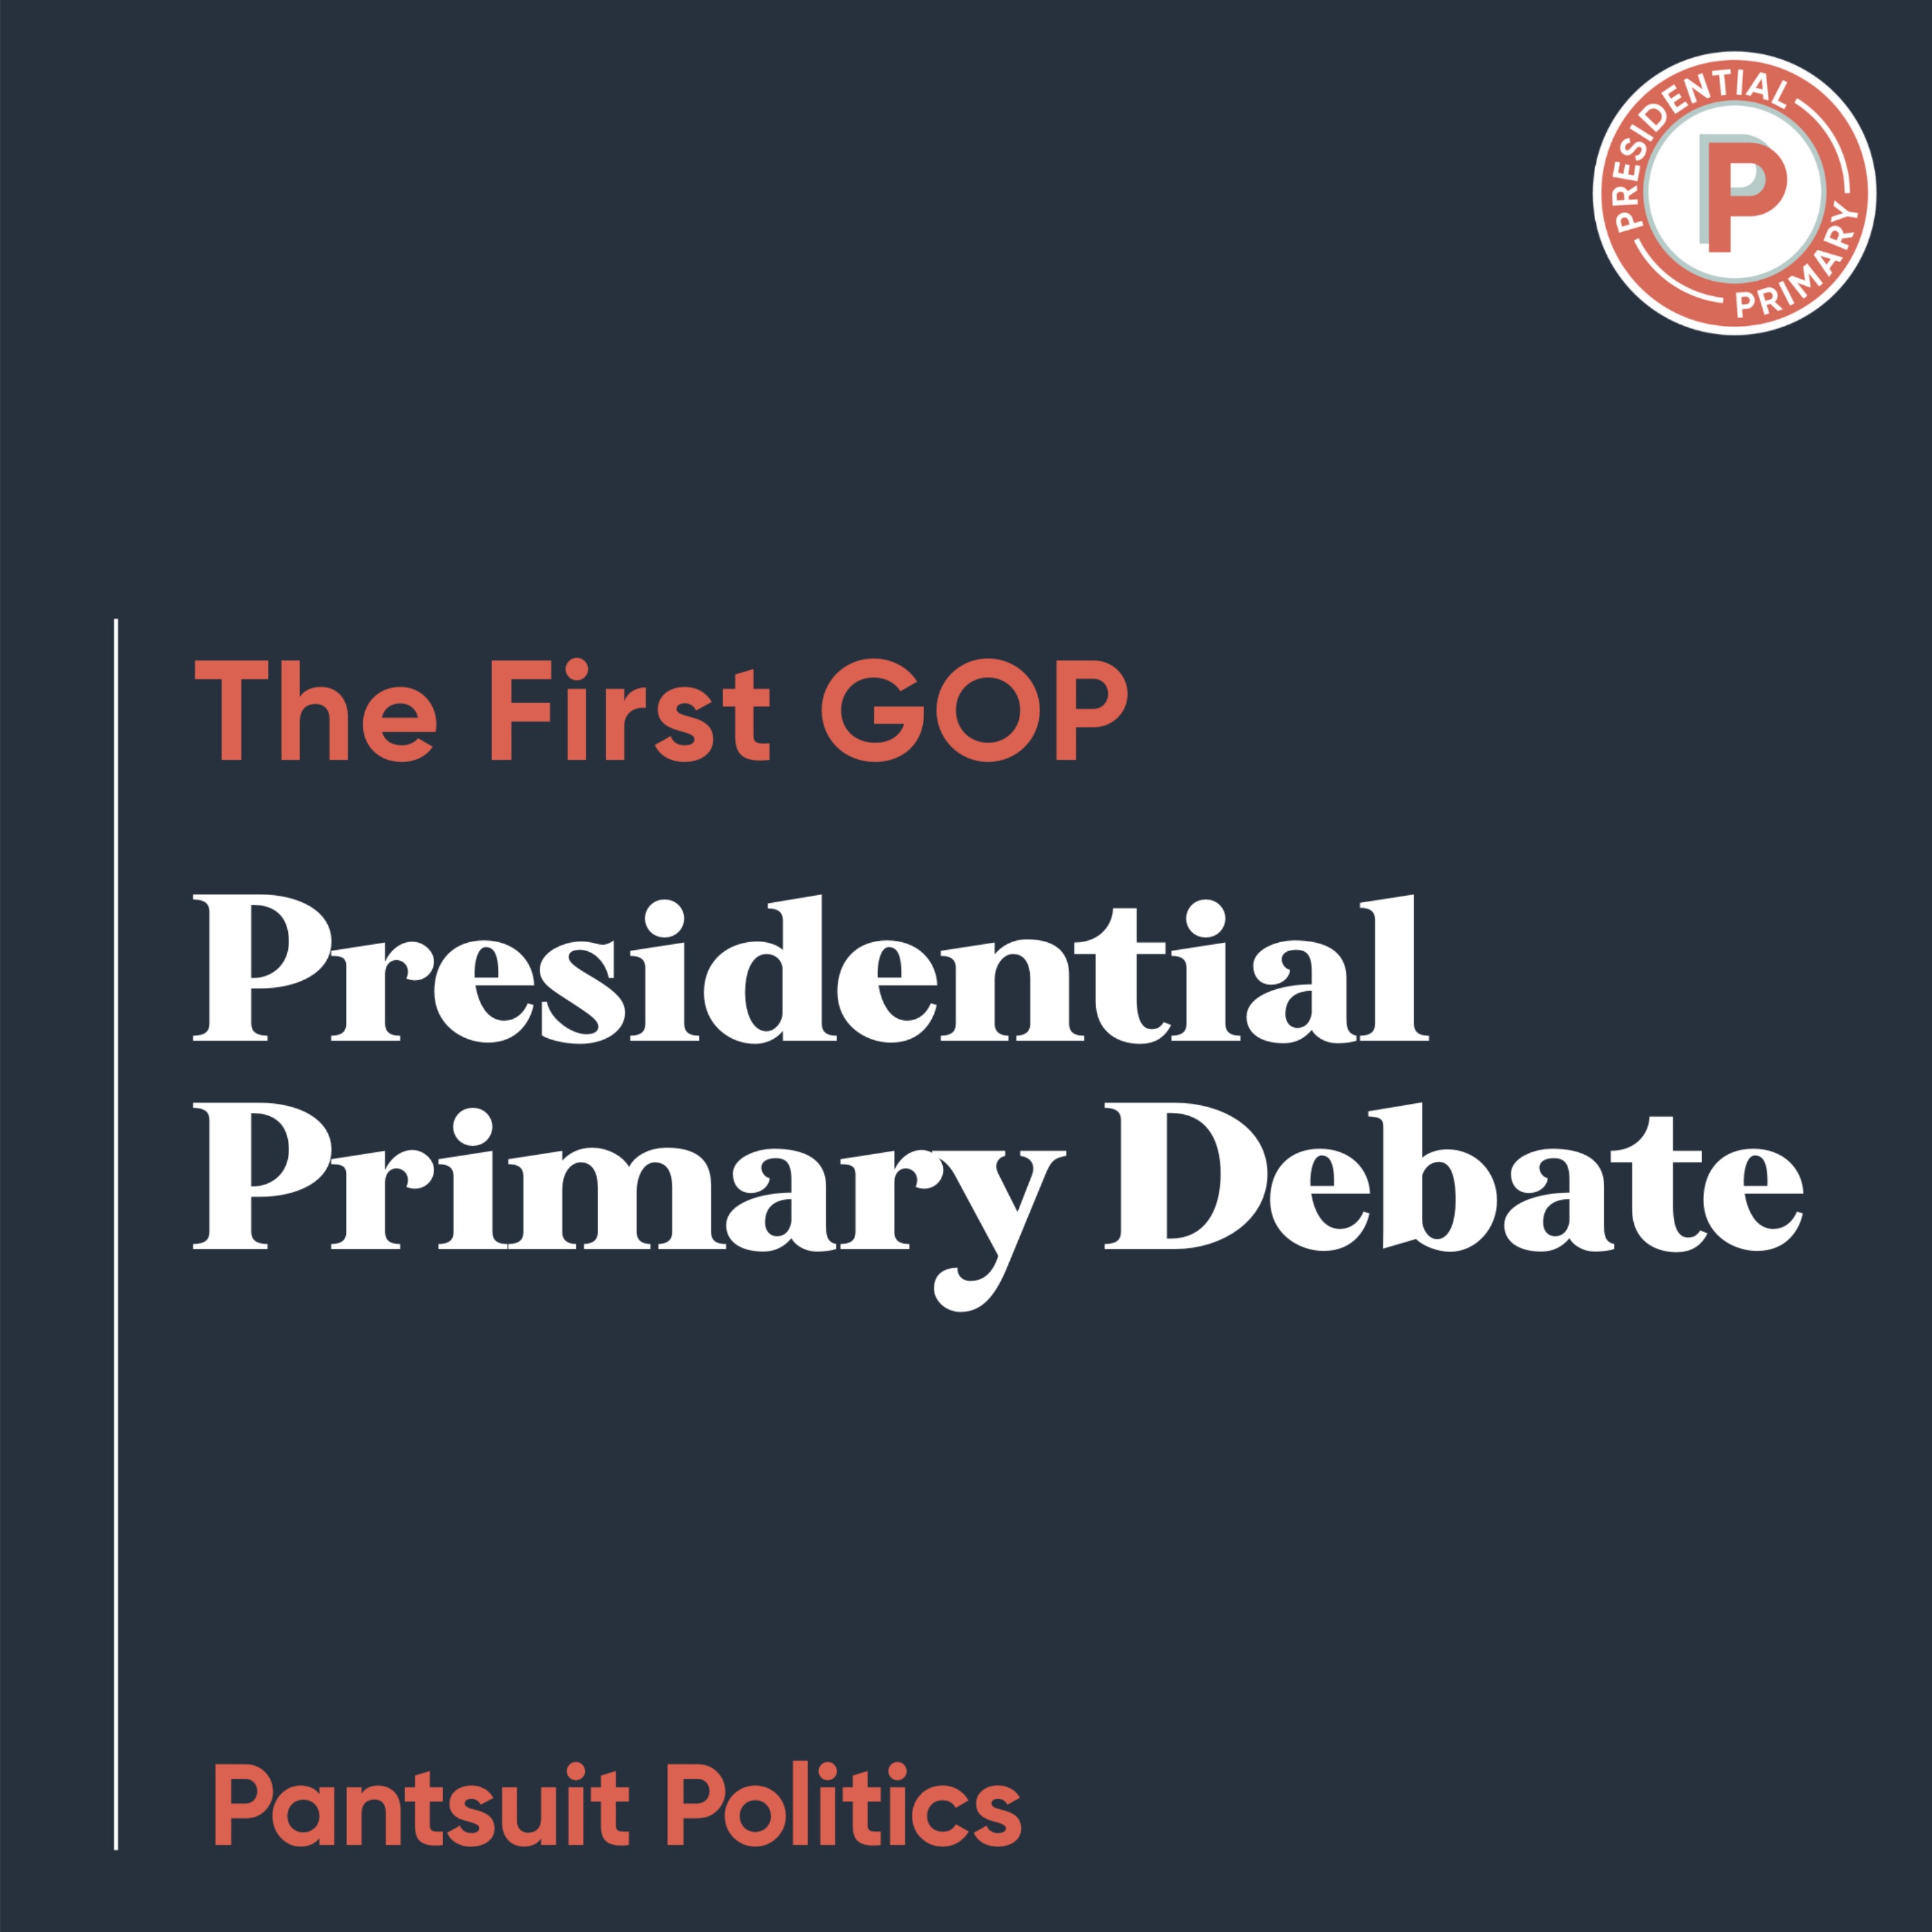 The First GOP Presidential Primary Debate